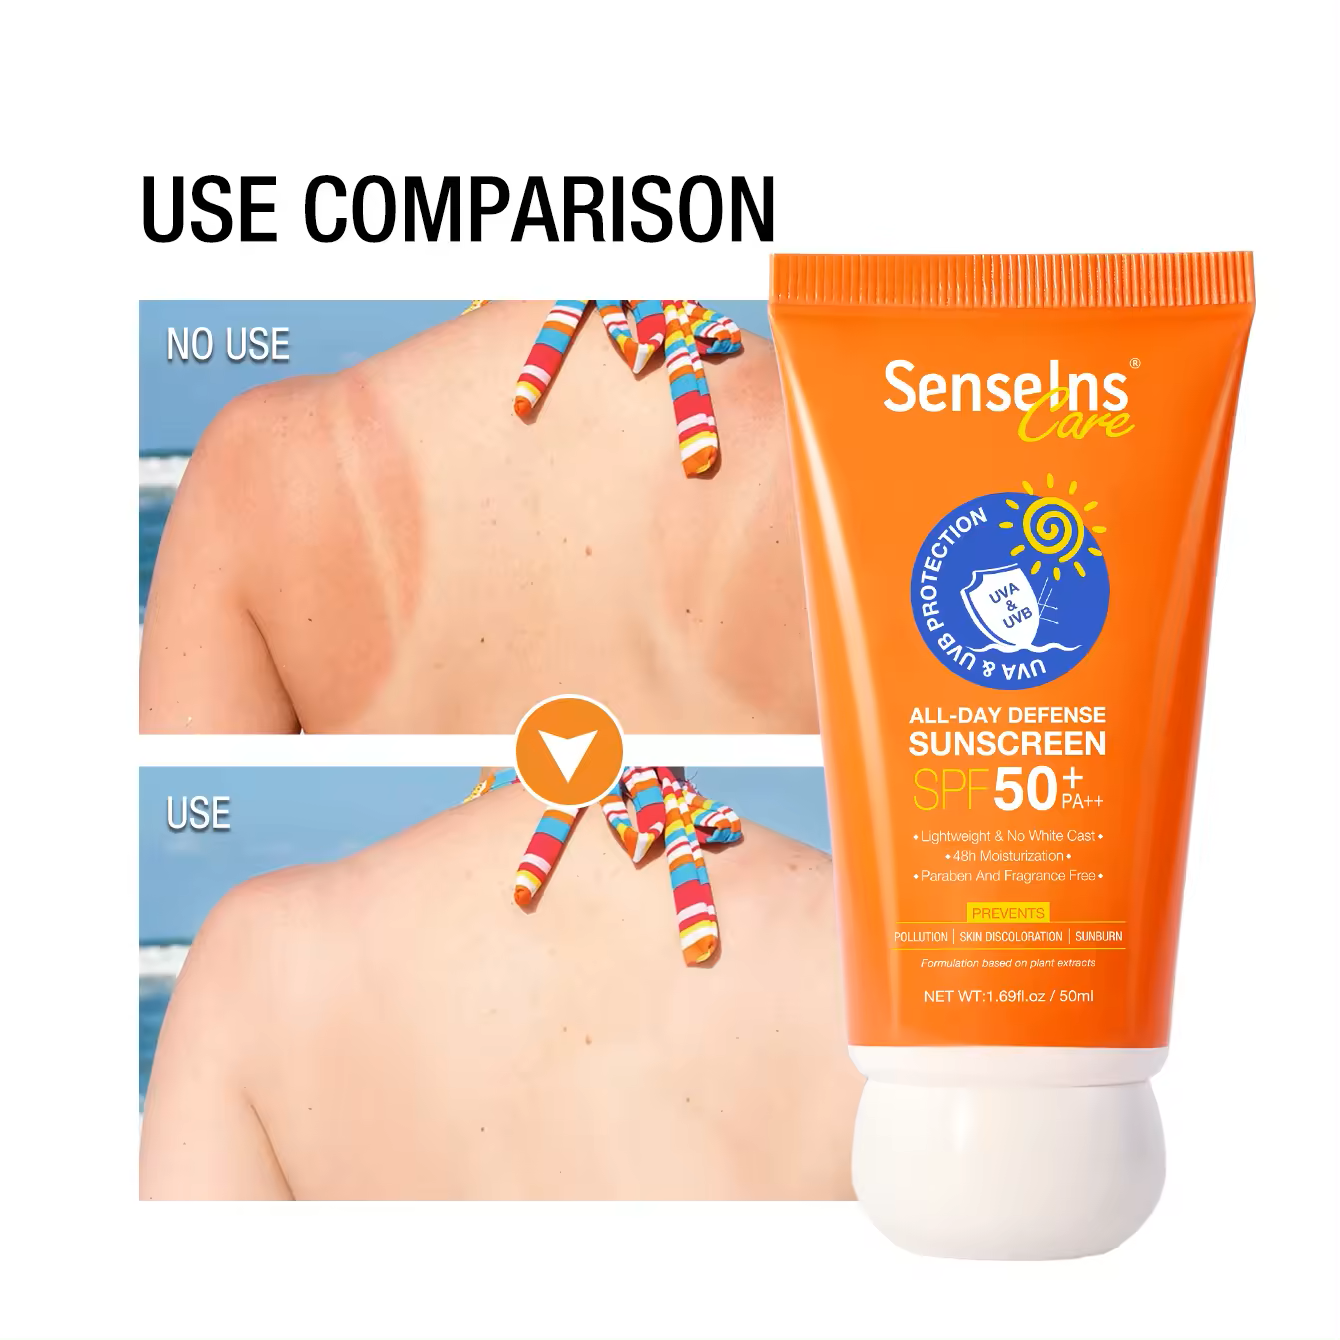 All-Day Defense Sunscreen organic Moisturizing Soothing UV Perfect Sun cream